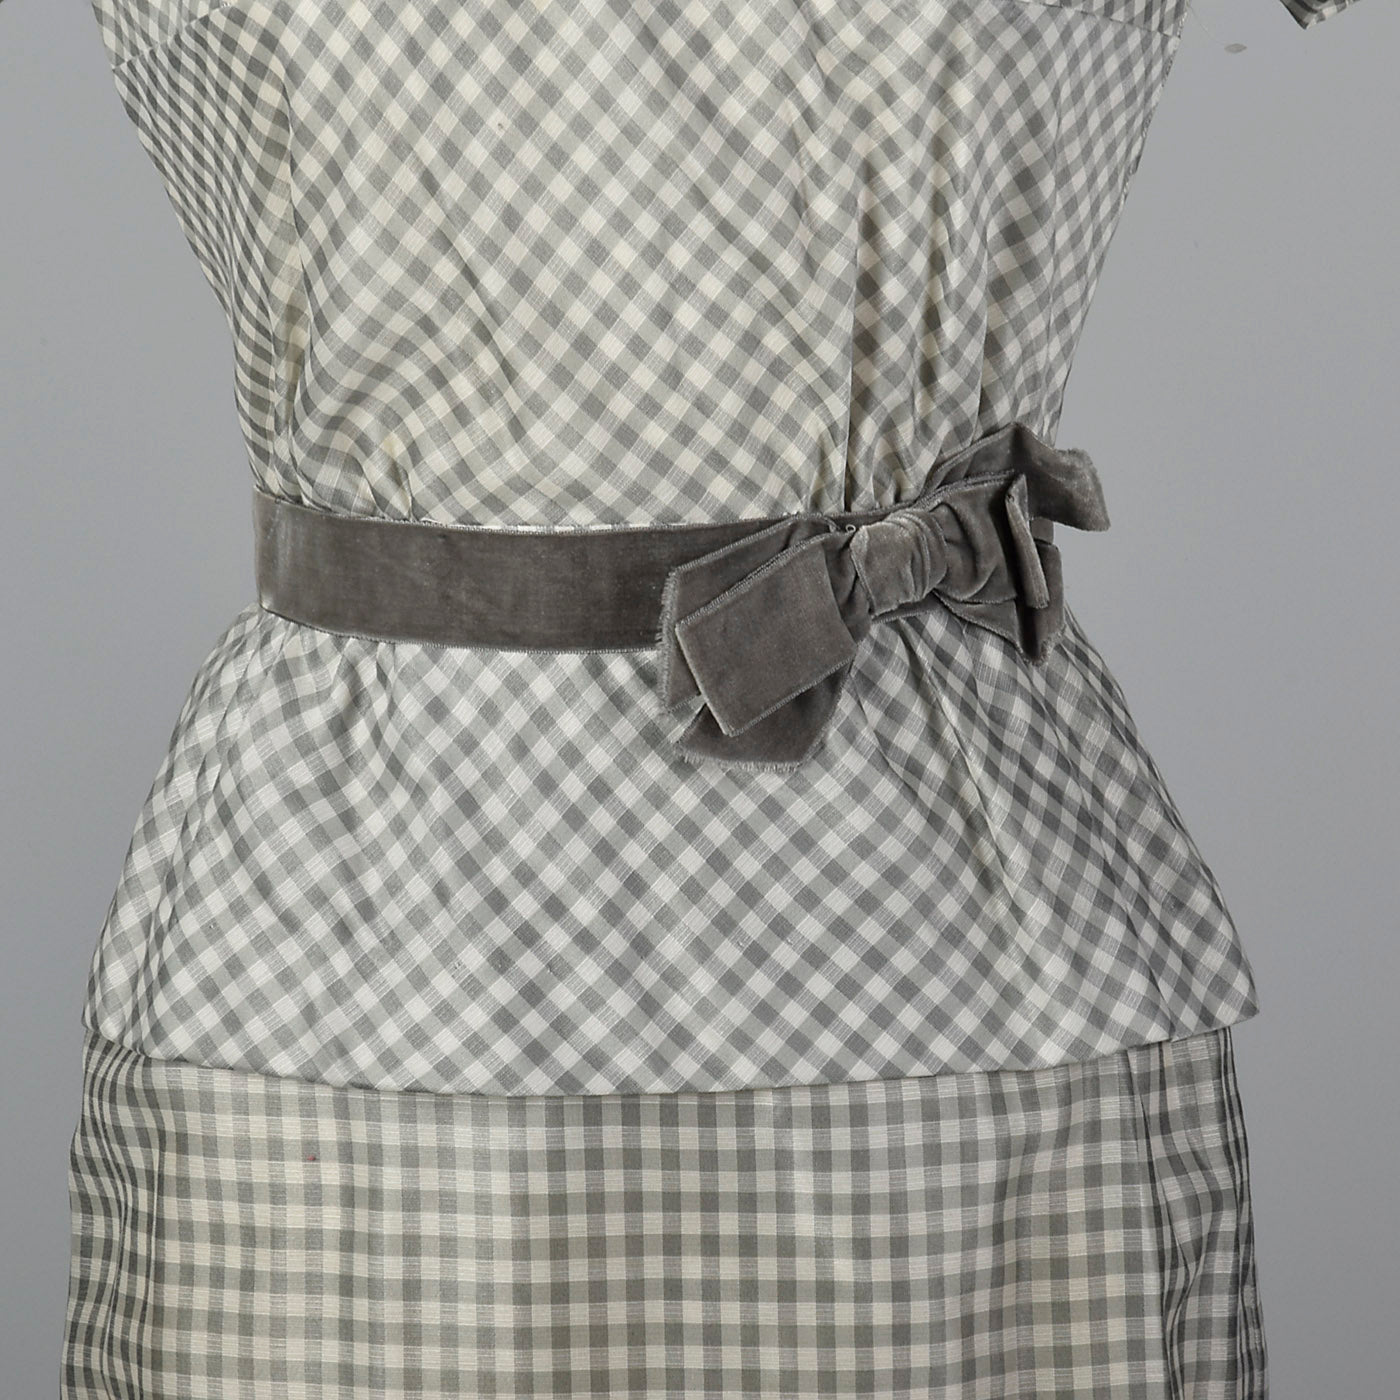 1950s Gray and White Gingham Dress with Velvet Waist Band